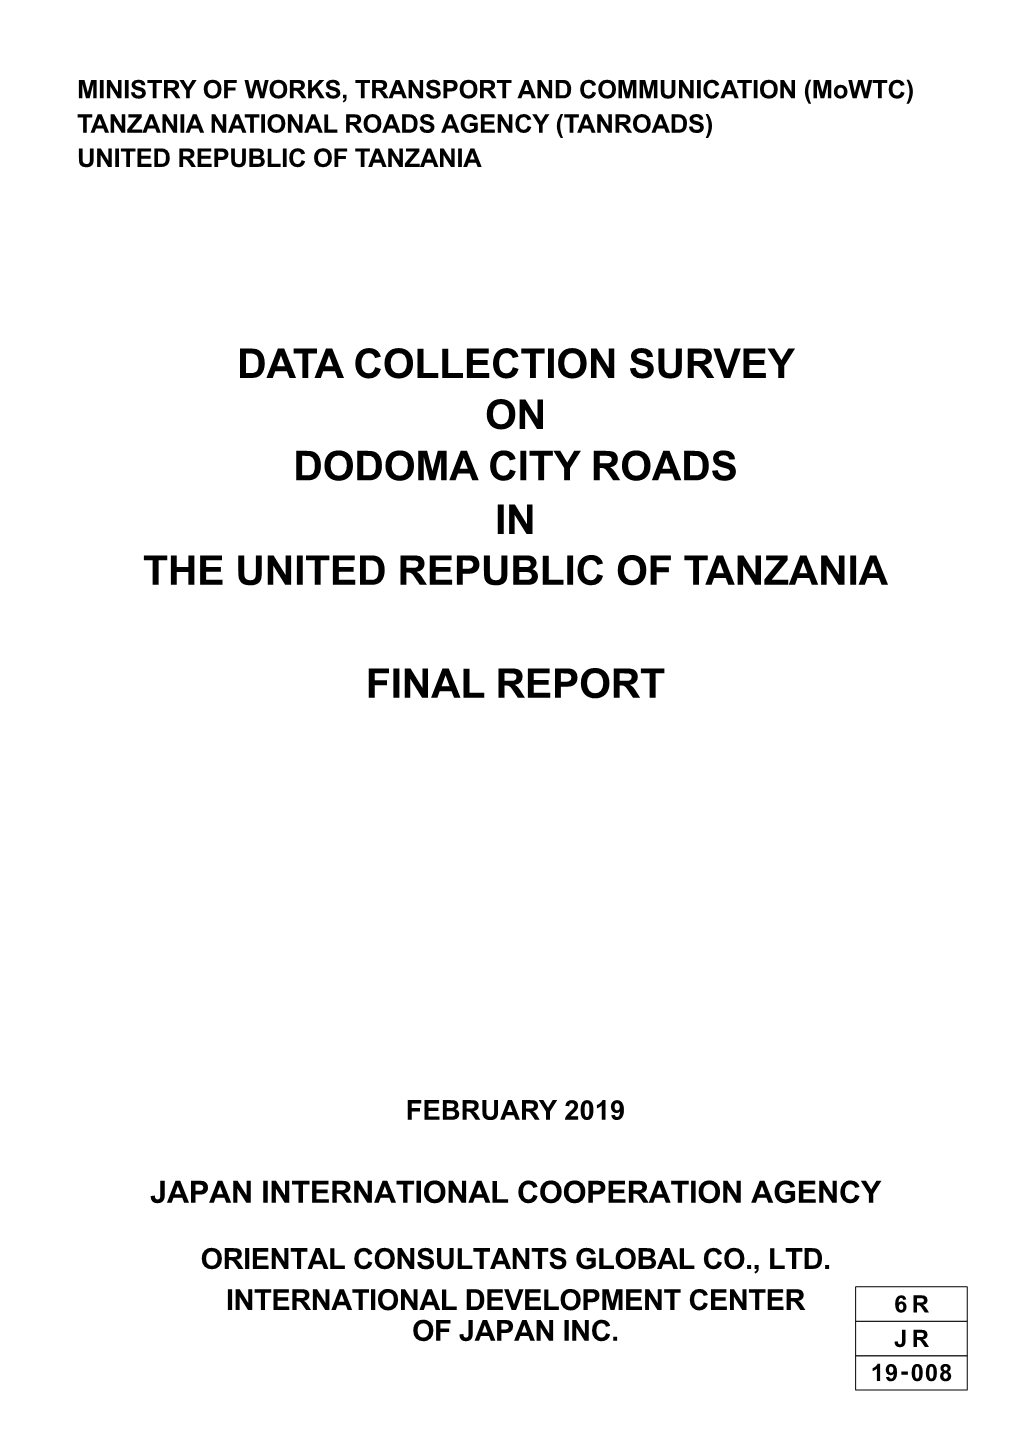 Data Collection Survey on Dodoma City Roads in the United Republic of Tanzania